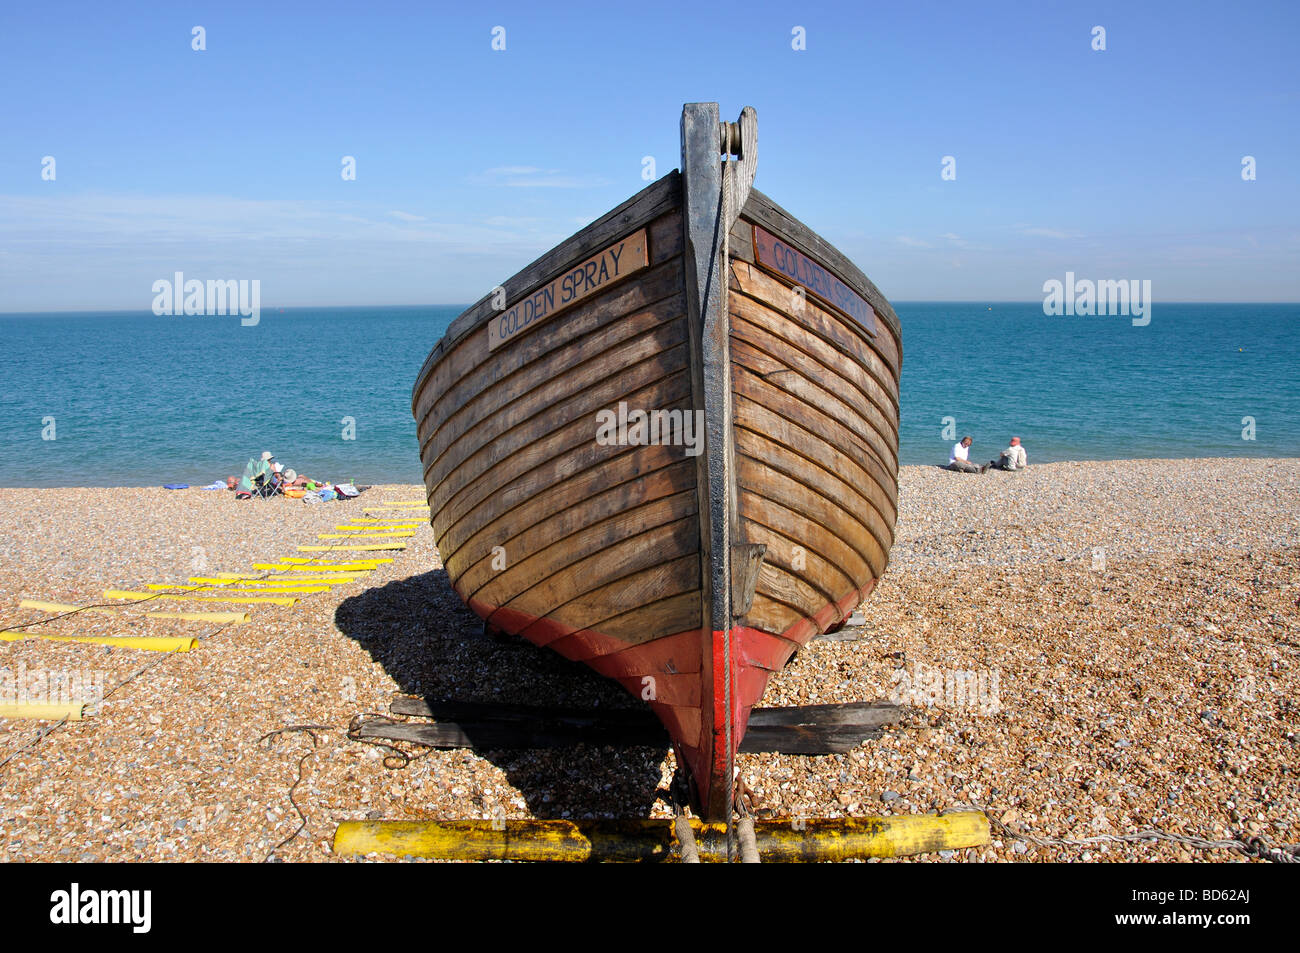 Wooden fishing boat on beach, Walmer, Kent, England, United Kingdom Stock Photo